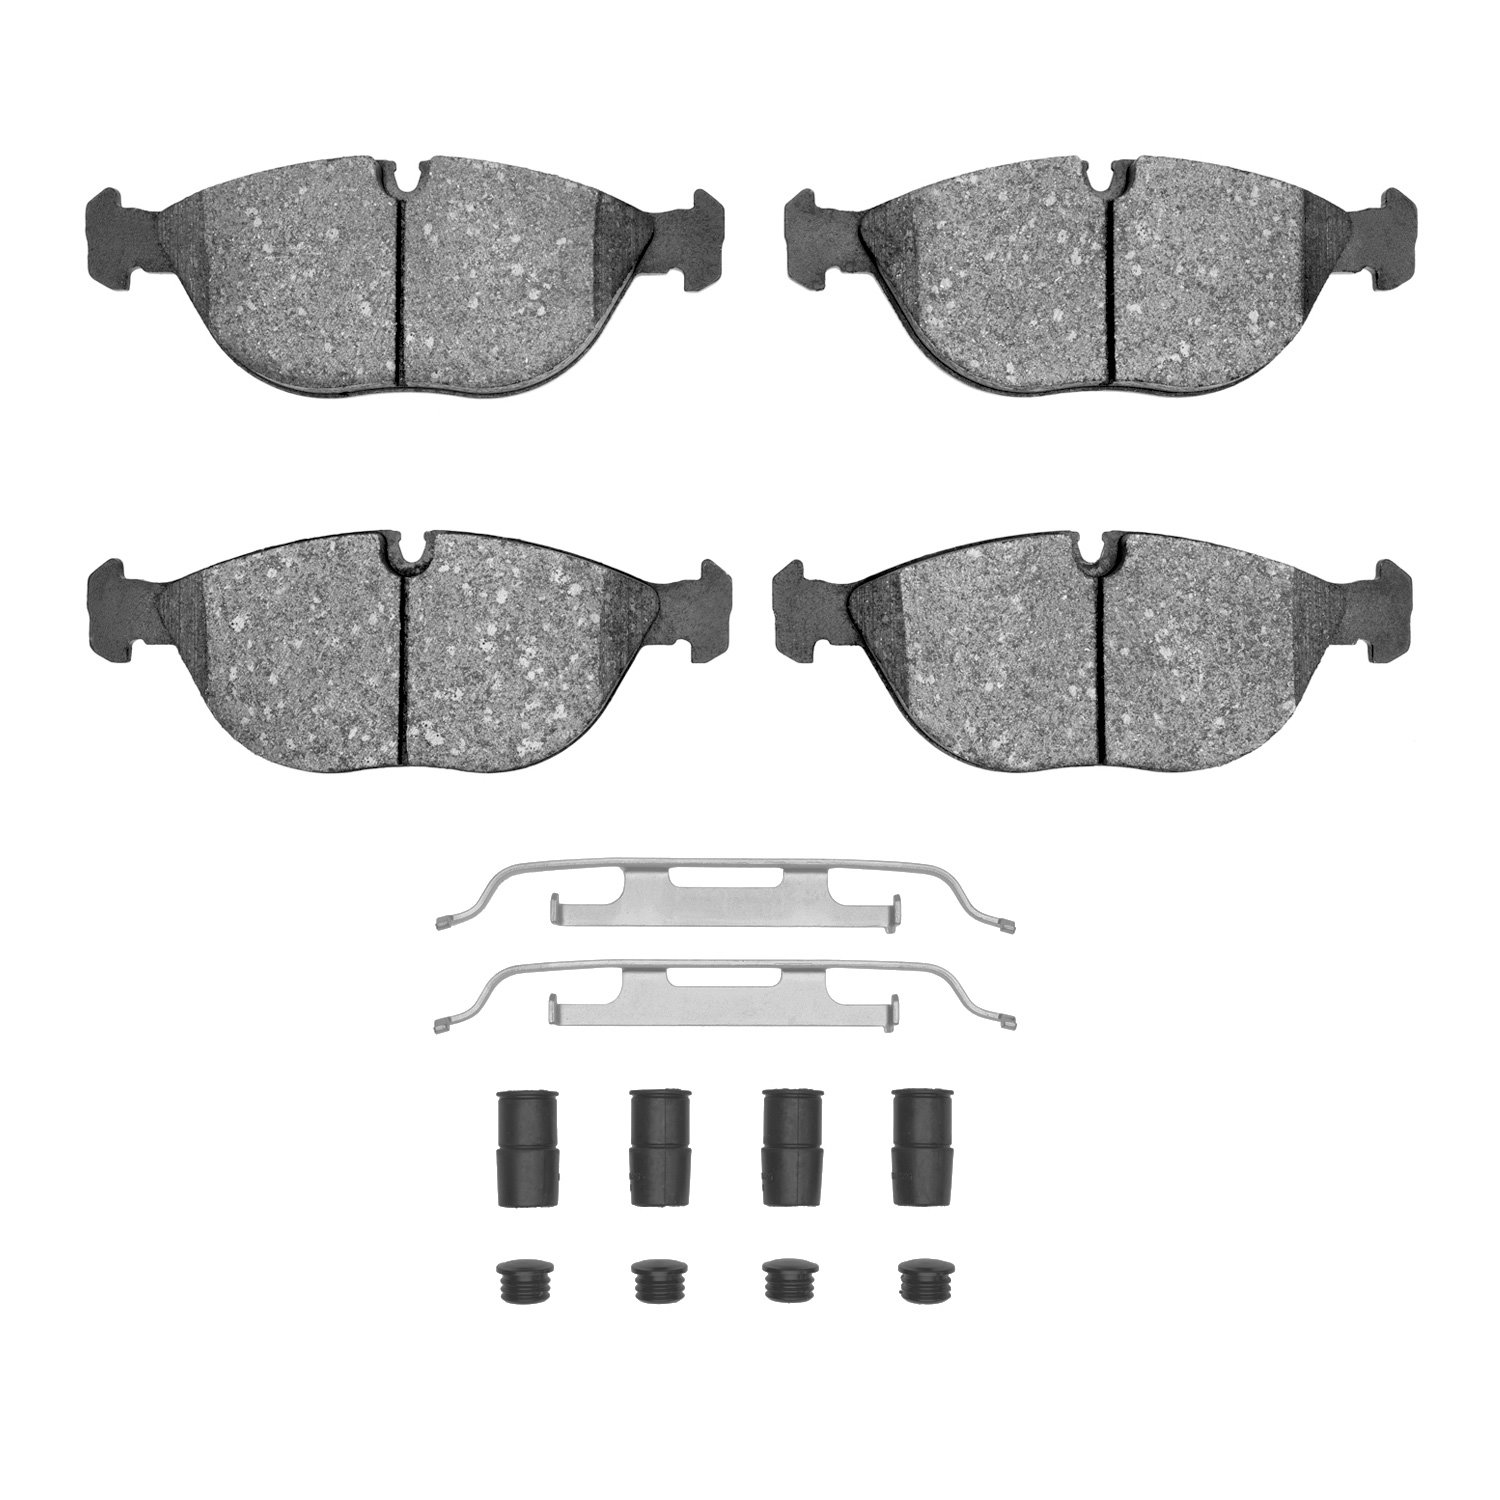 1310-0682-01 3000-Series Ceramic Brake Pads & Hardware Kit, 1995-2006 Multiple Makes/Models, Position: Front